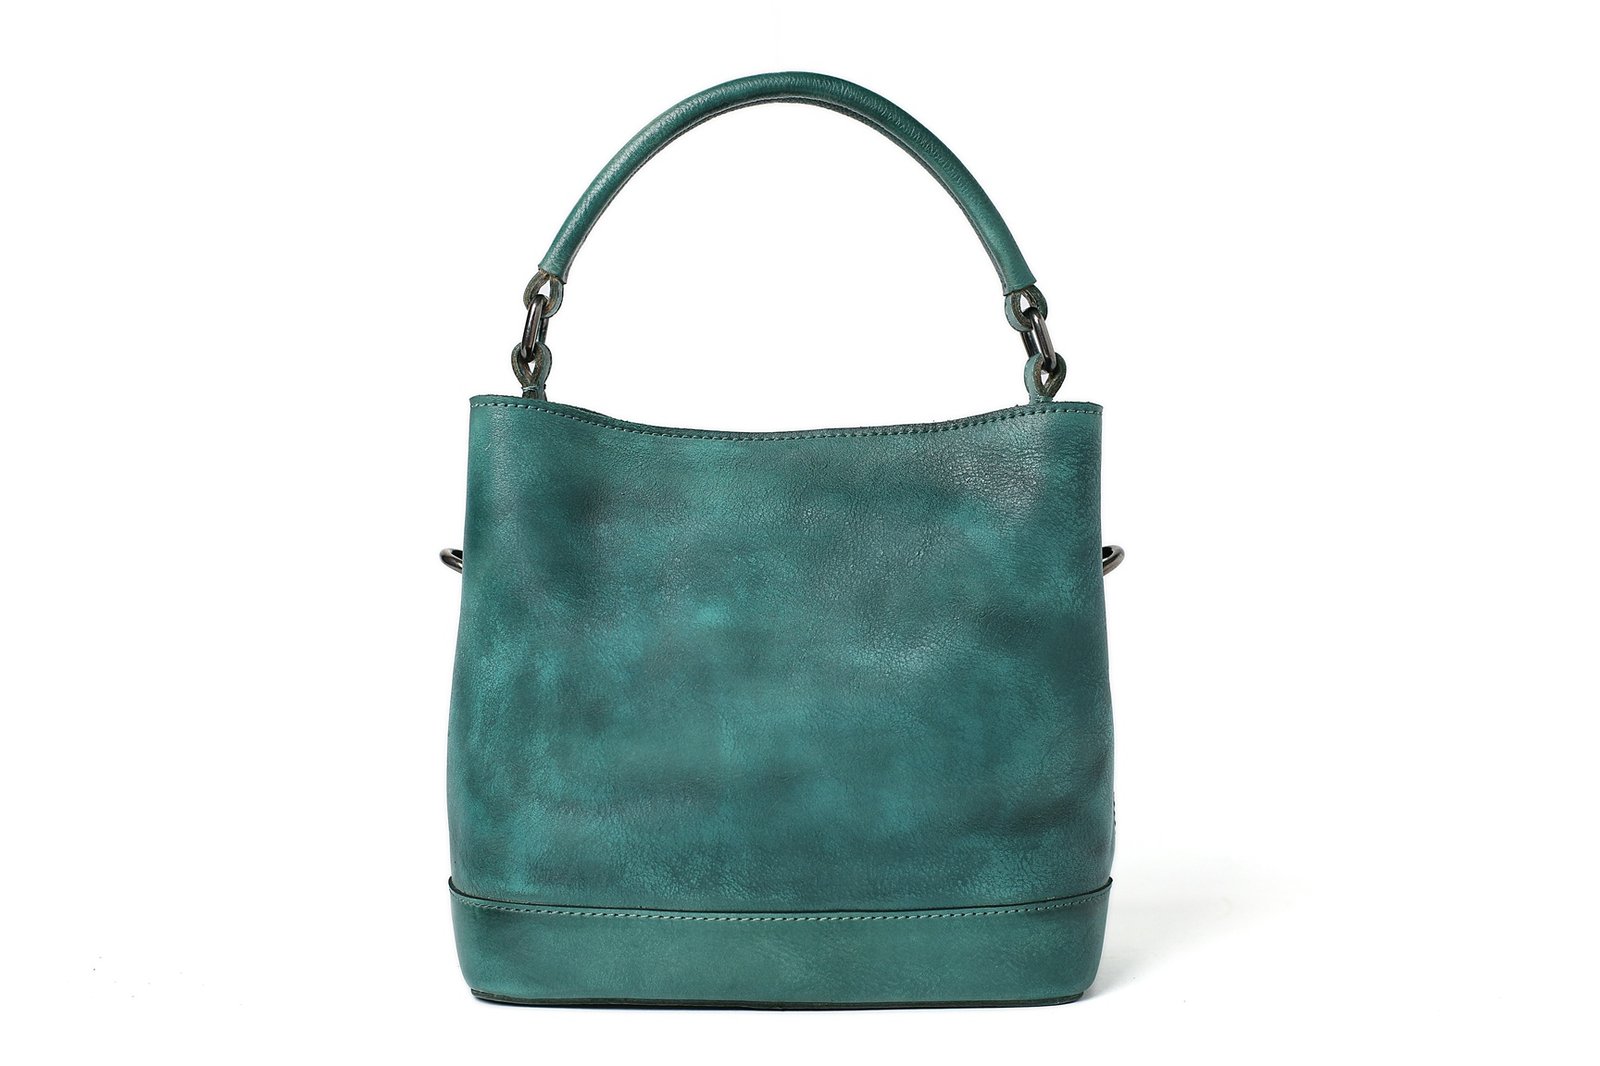 Designer MAXX of New York Pebbled Leather Dark Brown HoBo Bag Handbag | eBay